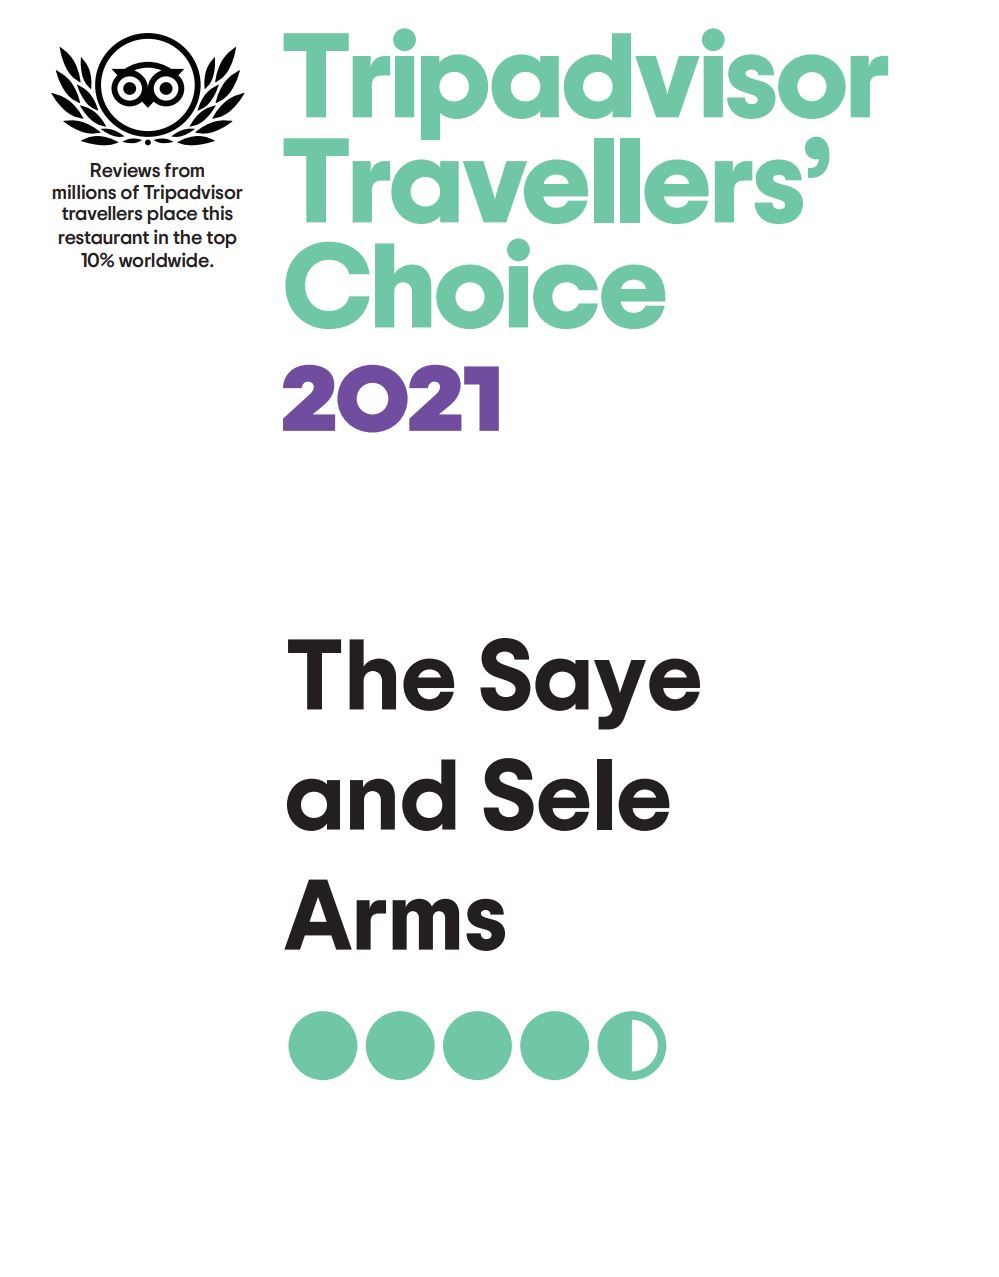 Travelers choice award 2021